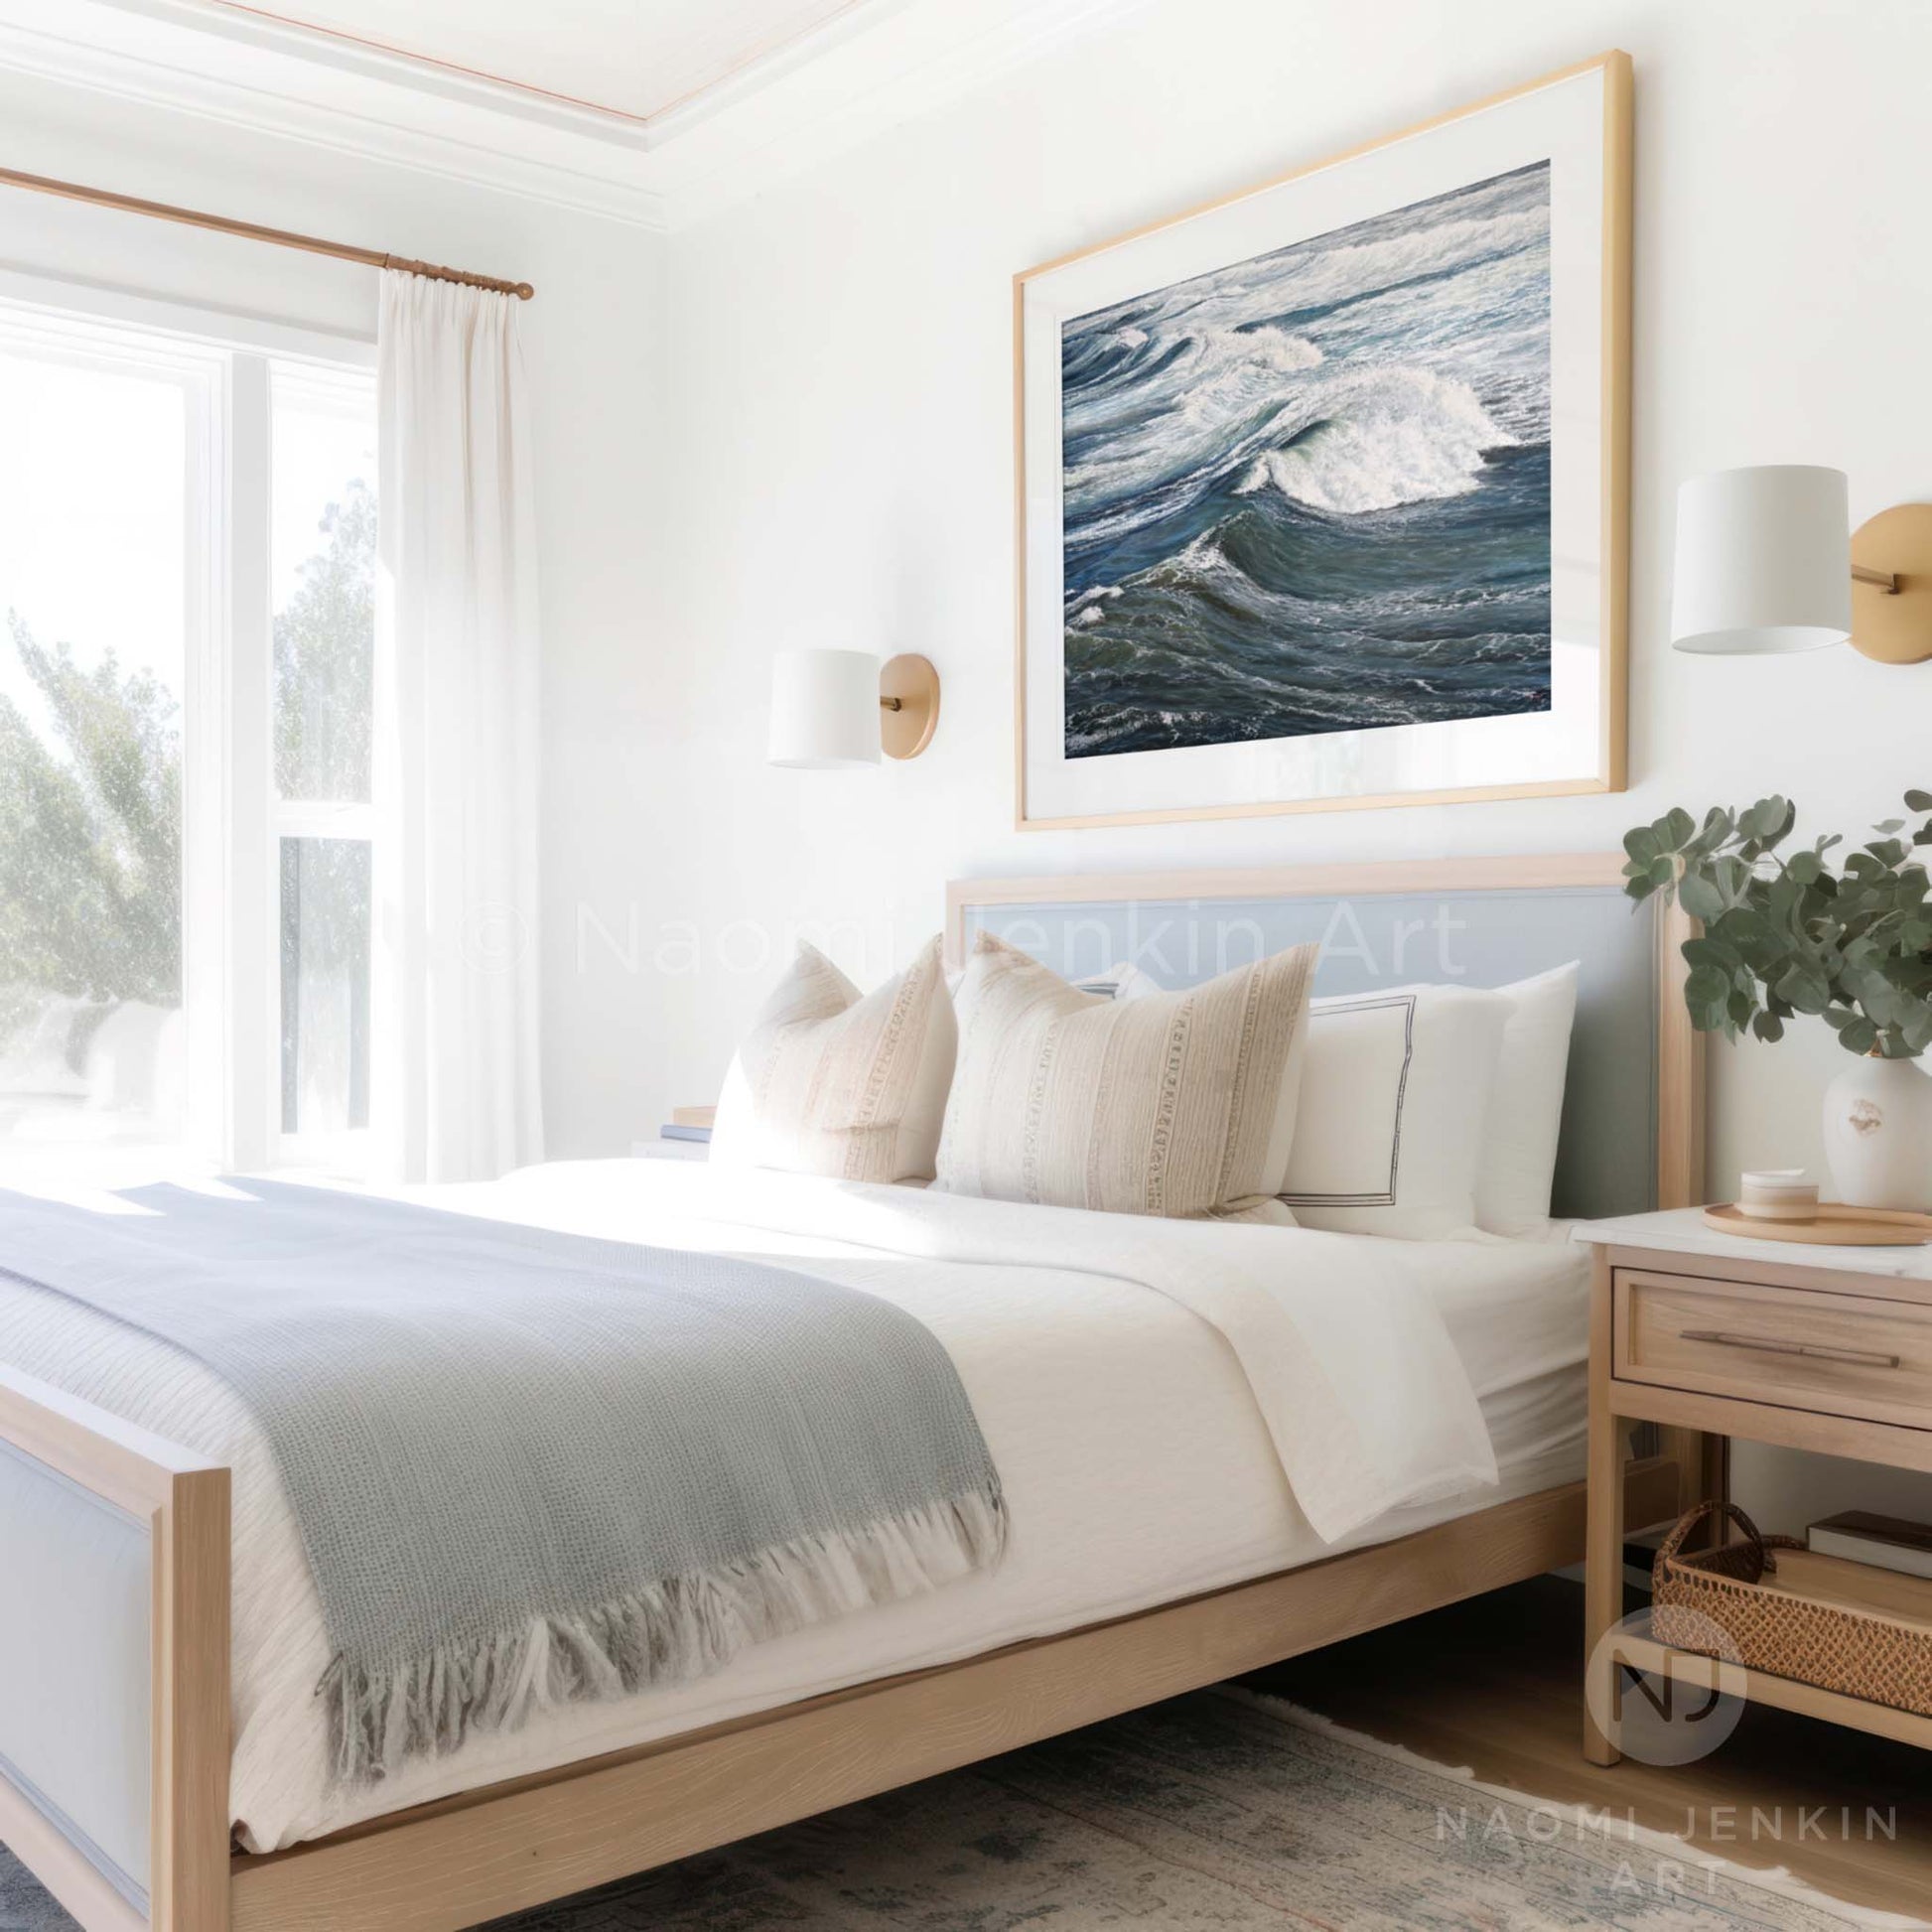 Framed seascape print 'Wind Swept Rollers' by seascape artist Naomi Jenkin in a bedroom setting